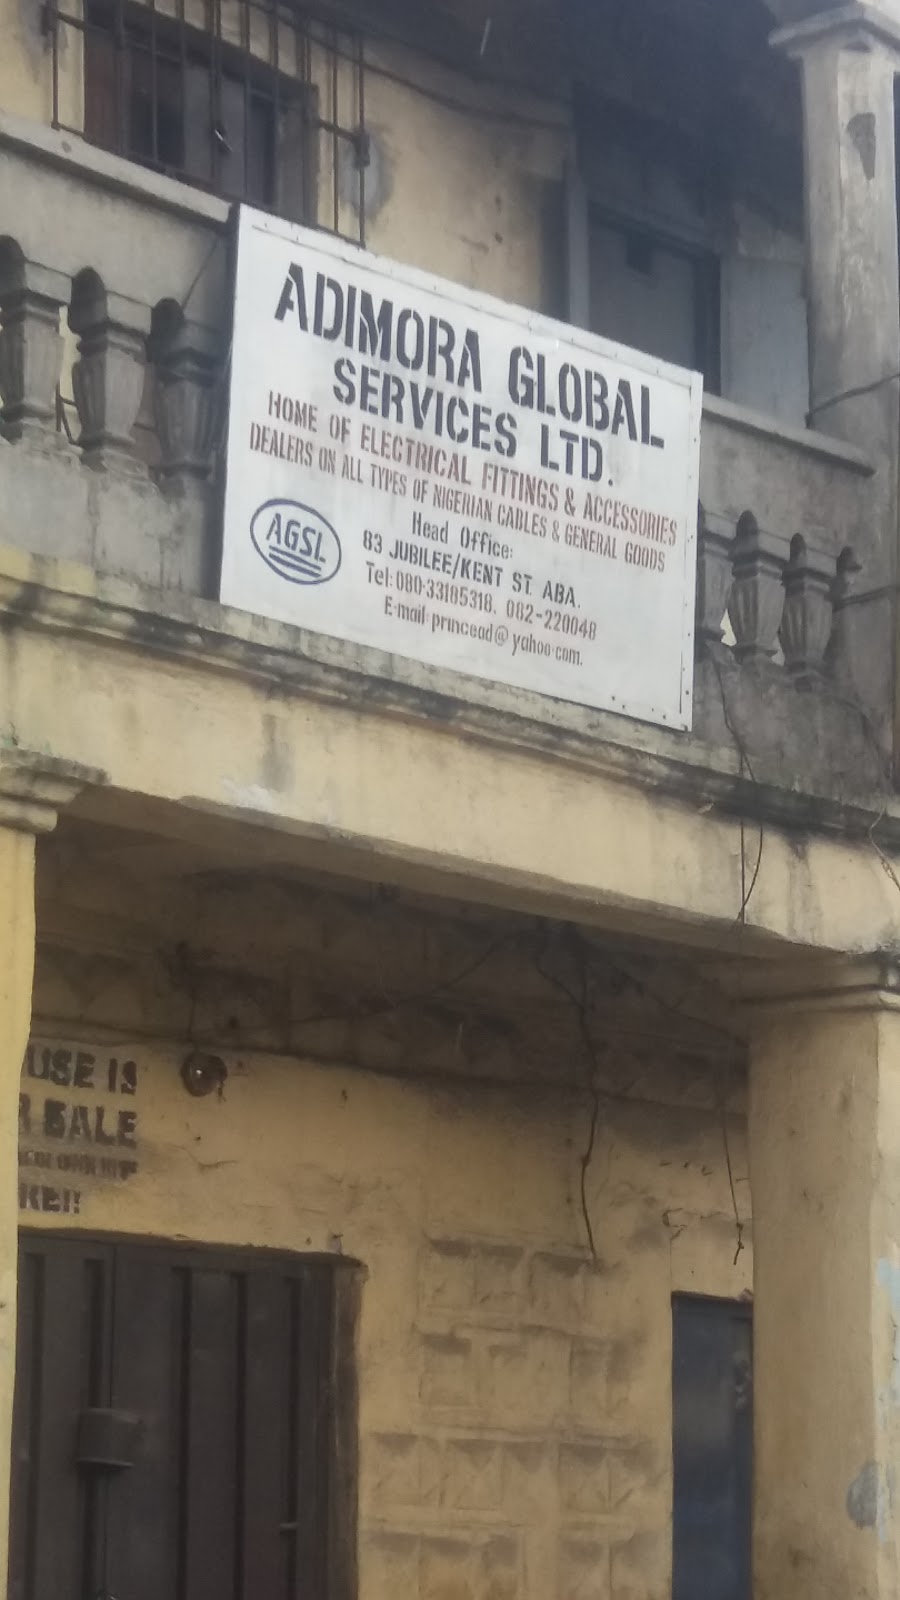 Adimora Global Services Ltd